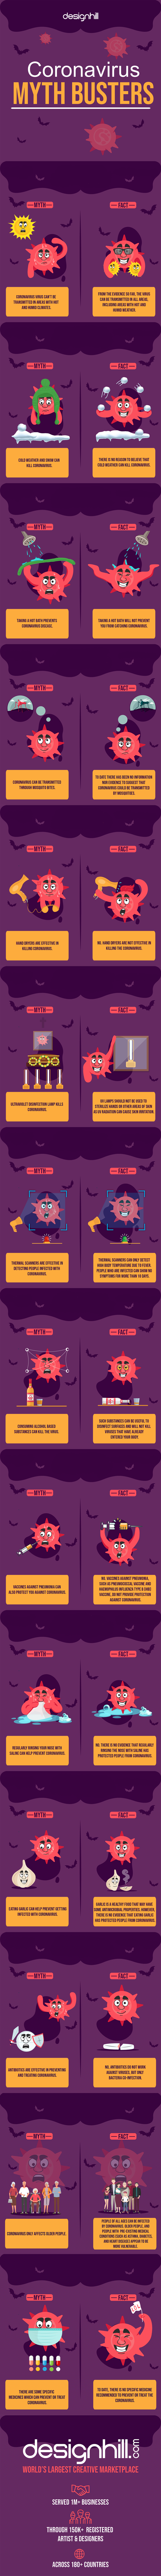 Coronavirus-Myth-Buster-infographic-plaza